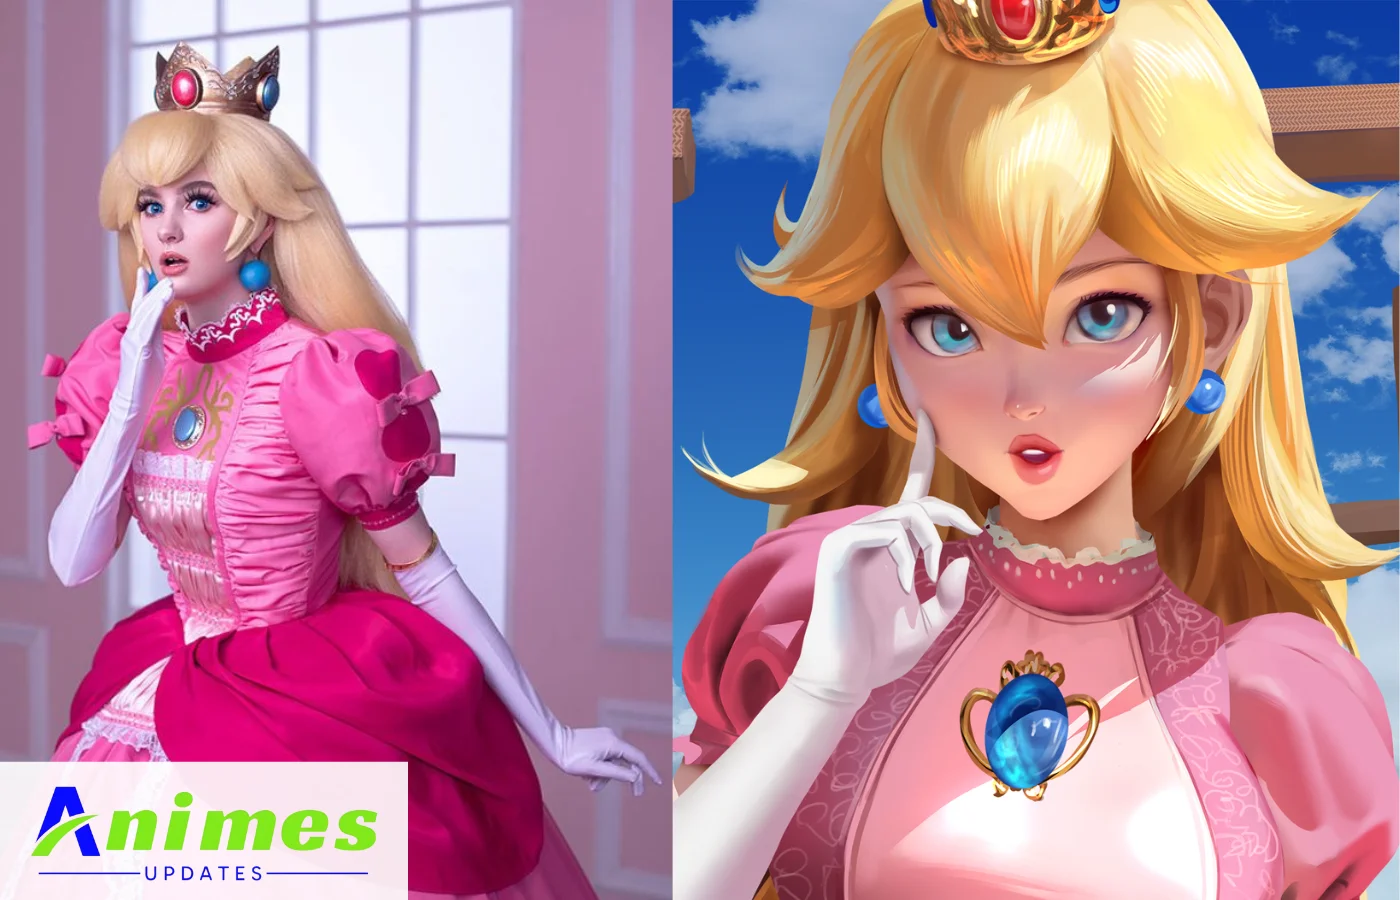 Princess Peach from Mario Brothers